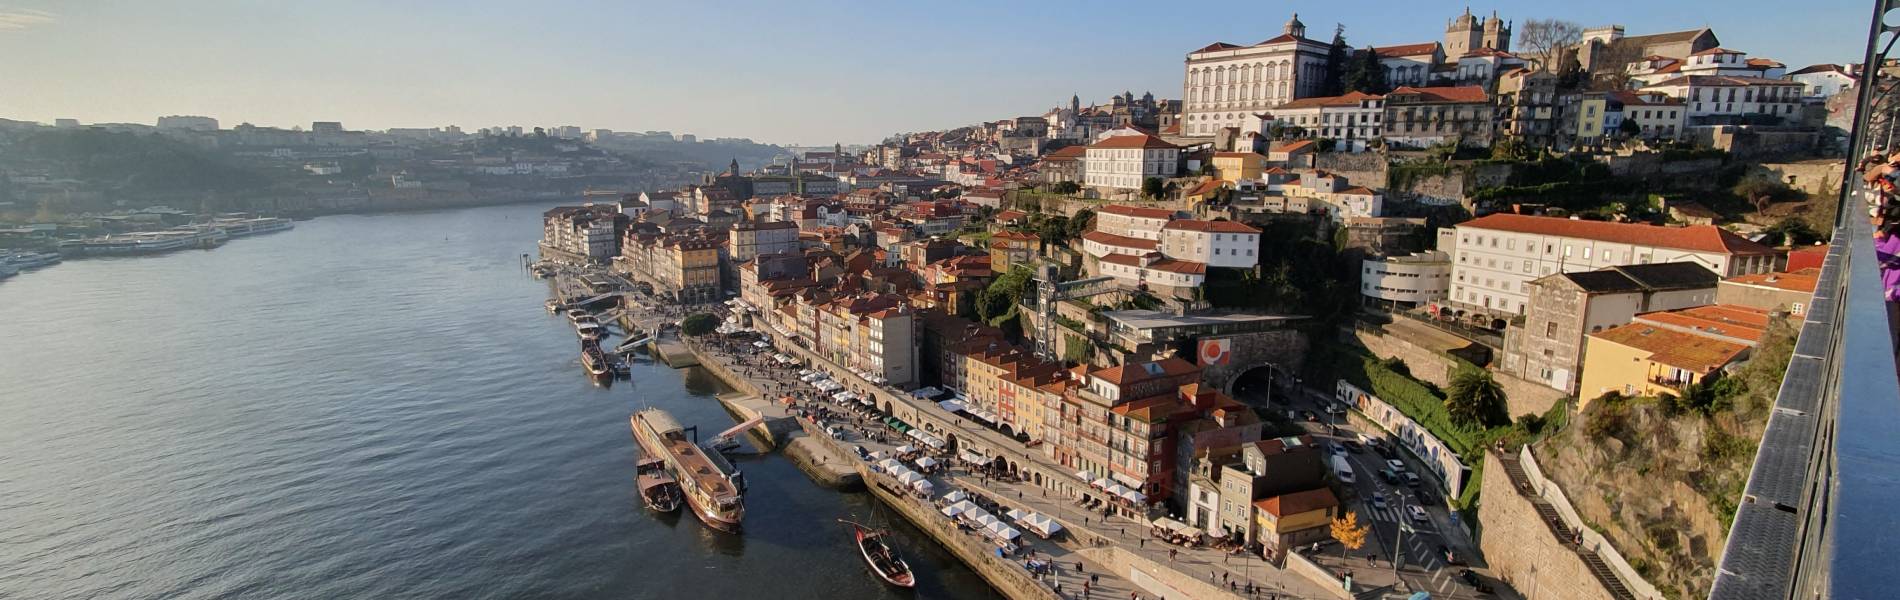 Legendary Porto Hotel  header